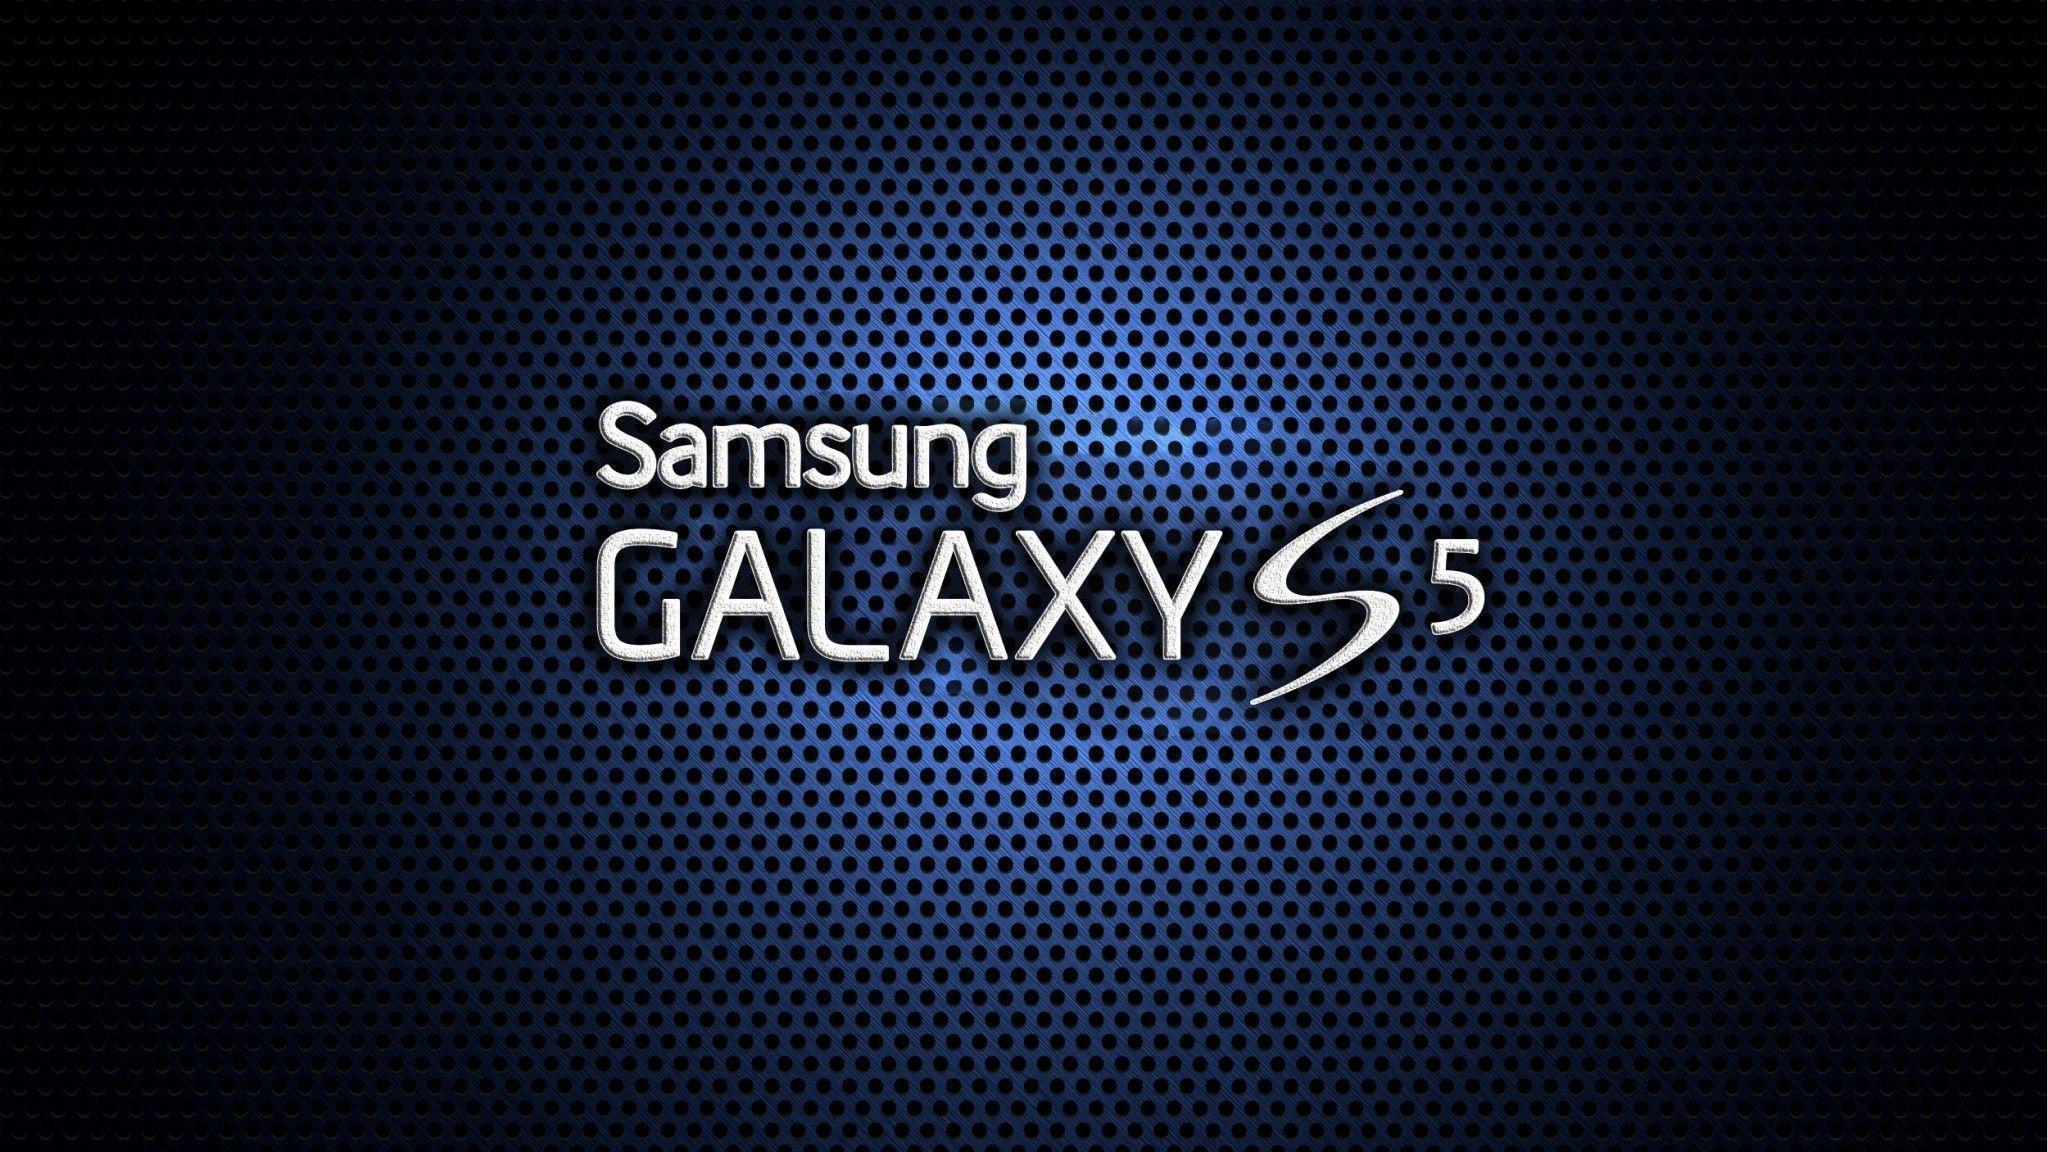 Samsung Galaxy S5 Logo Wallpaper Wide or HD